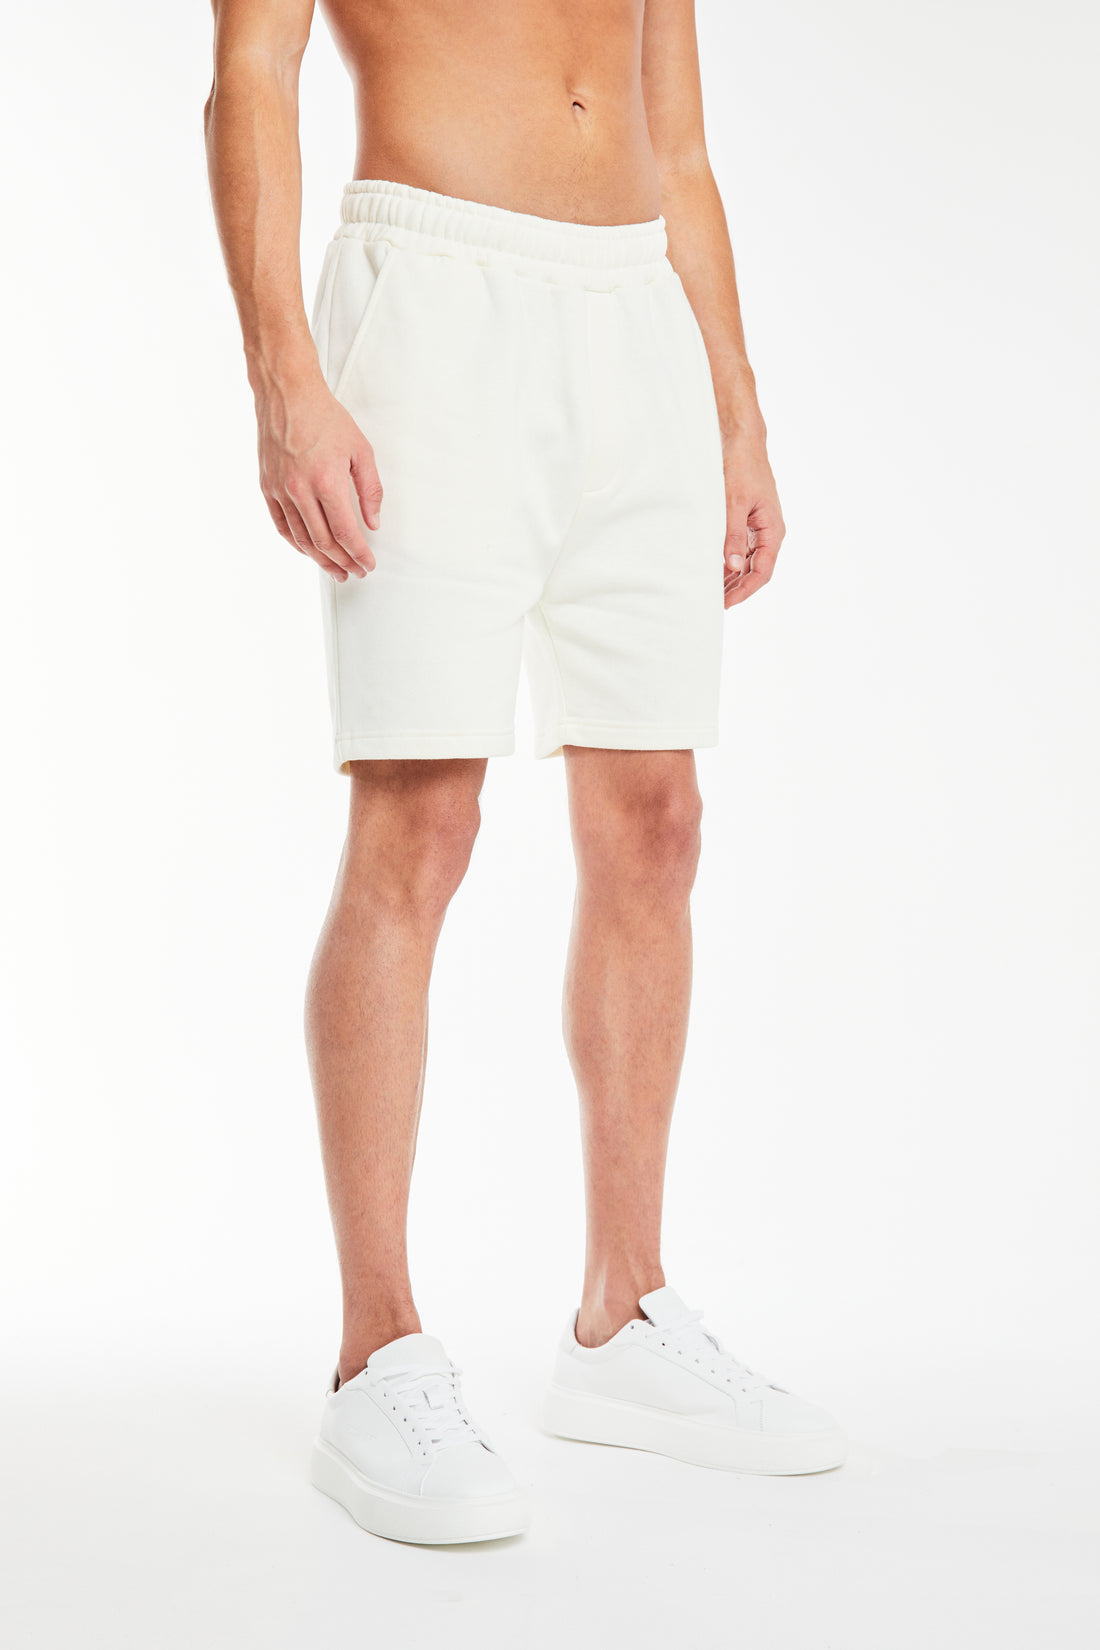 men's jersey shorts in cream